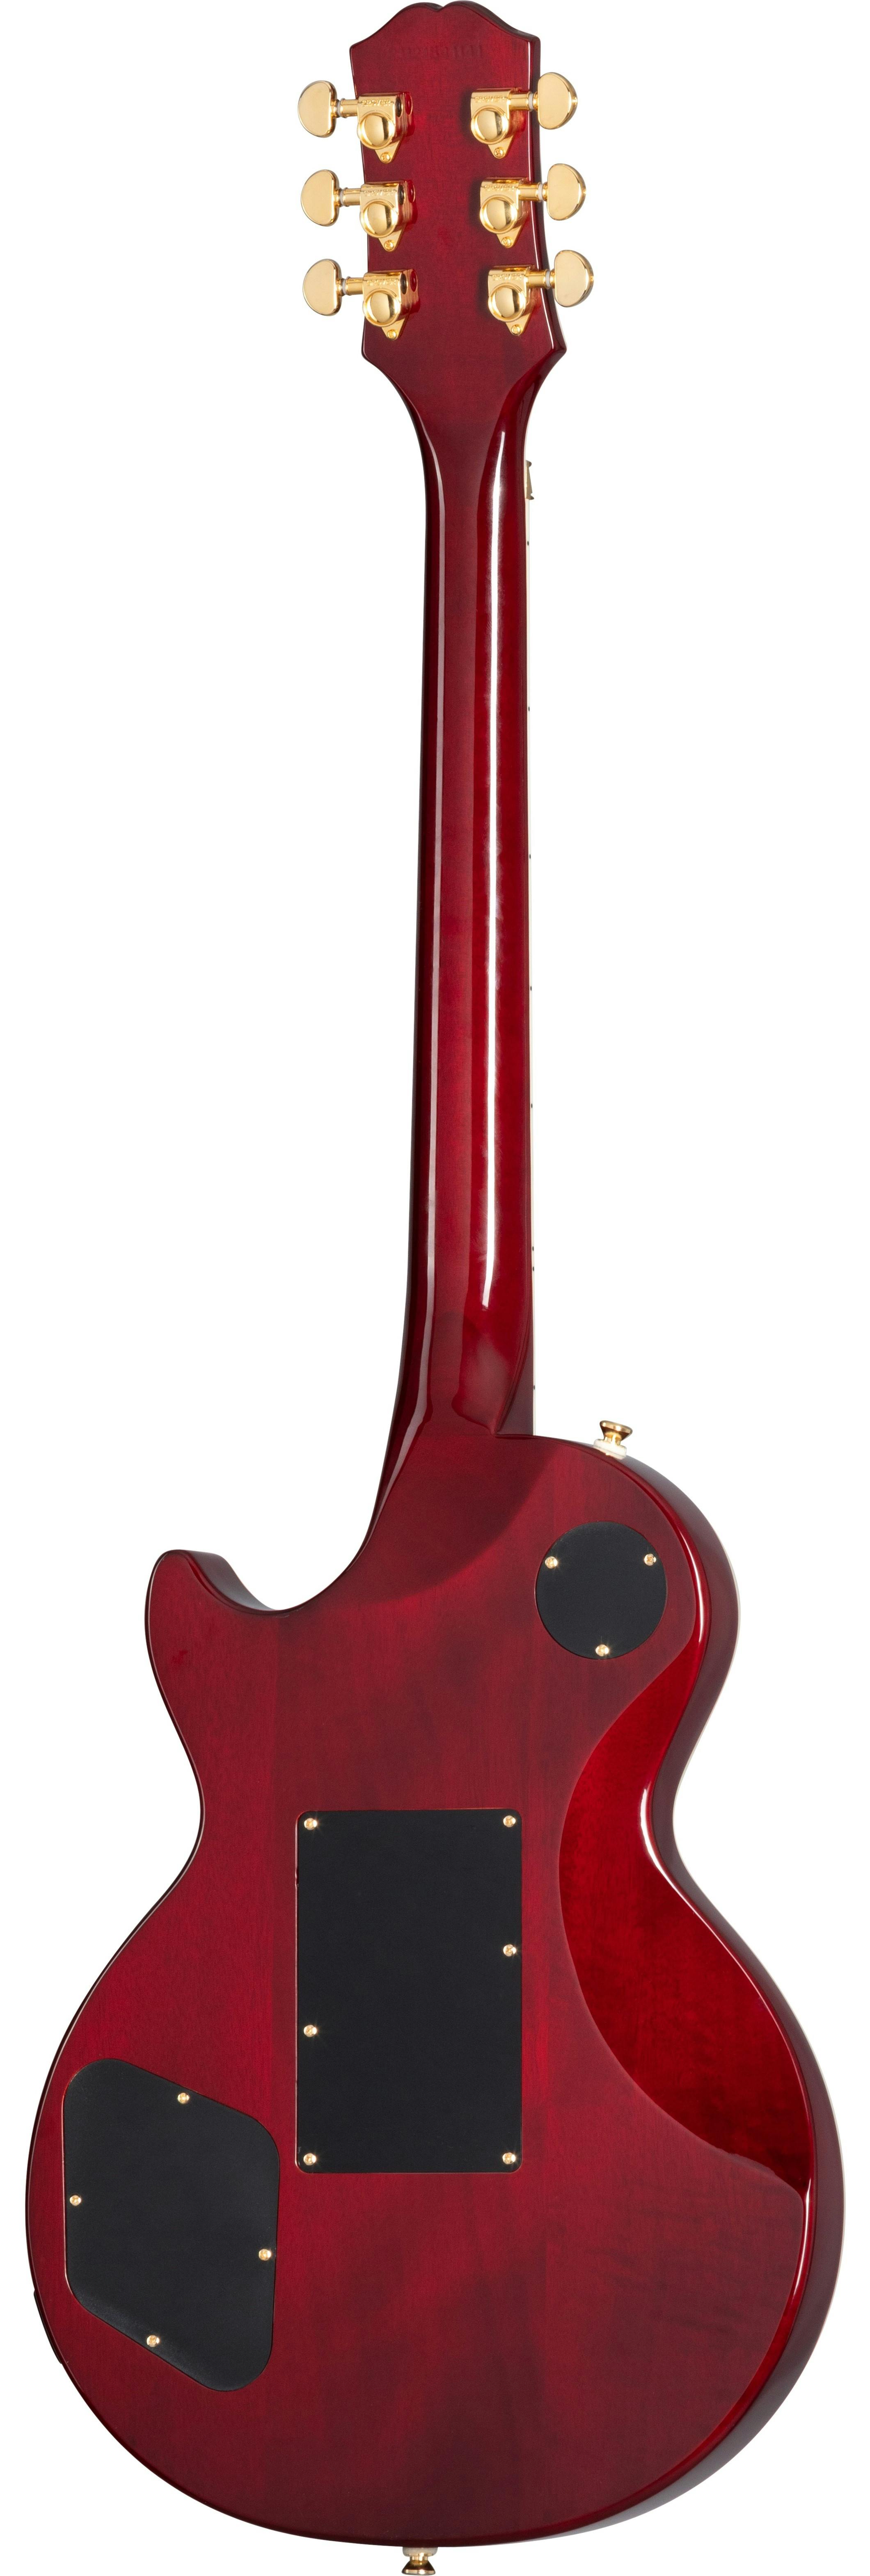 Epiphone Alex Lifeson Signature Les Paul Custom Axcess Electric Guitar ...